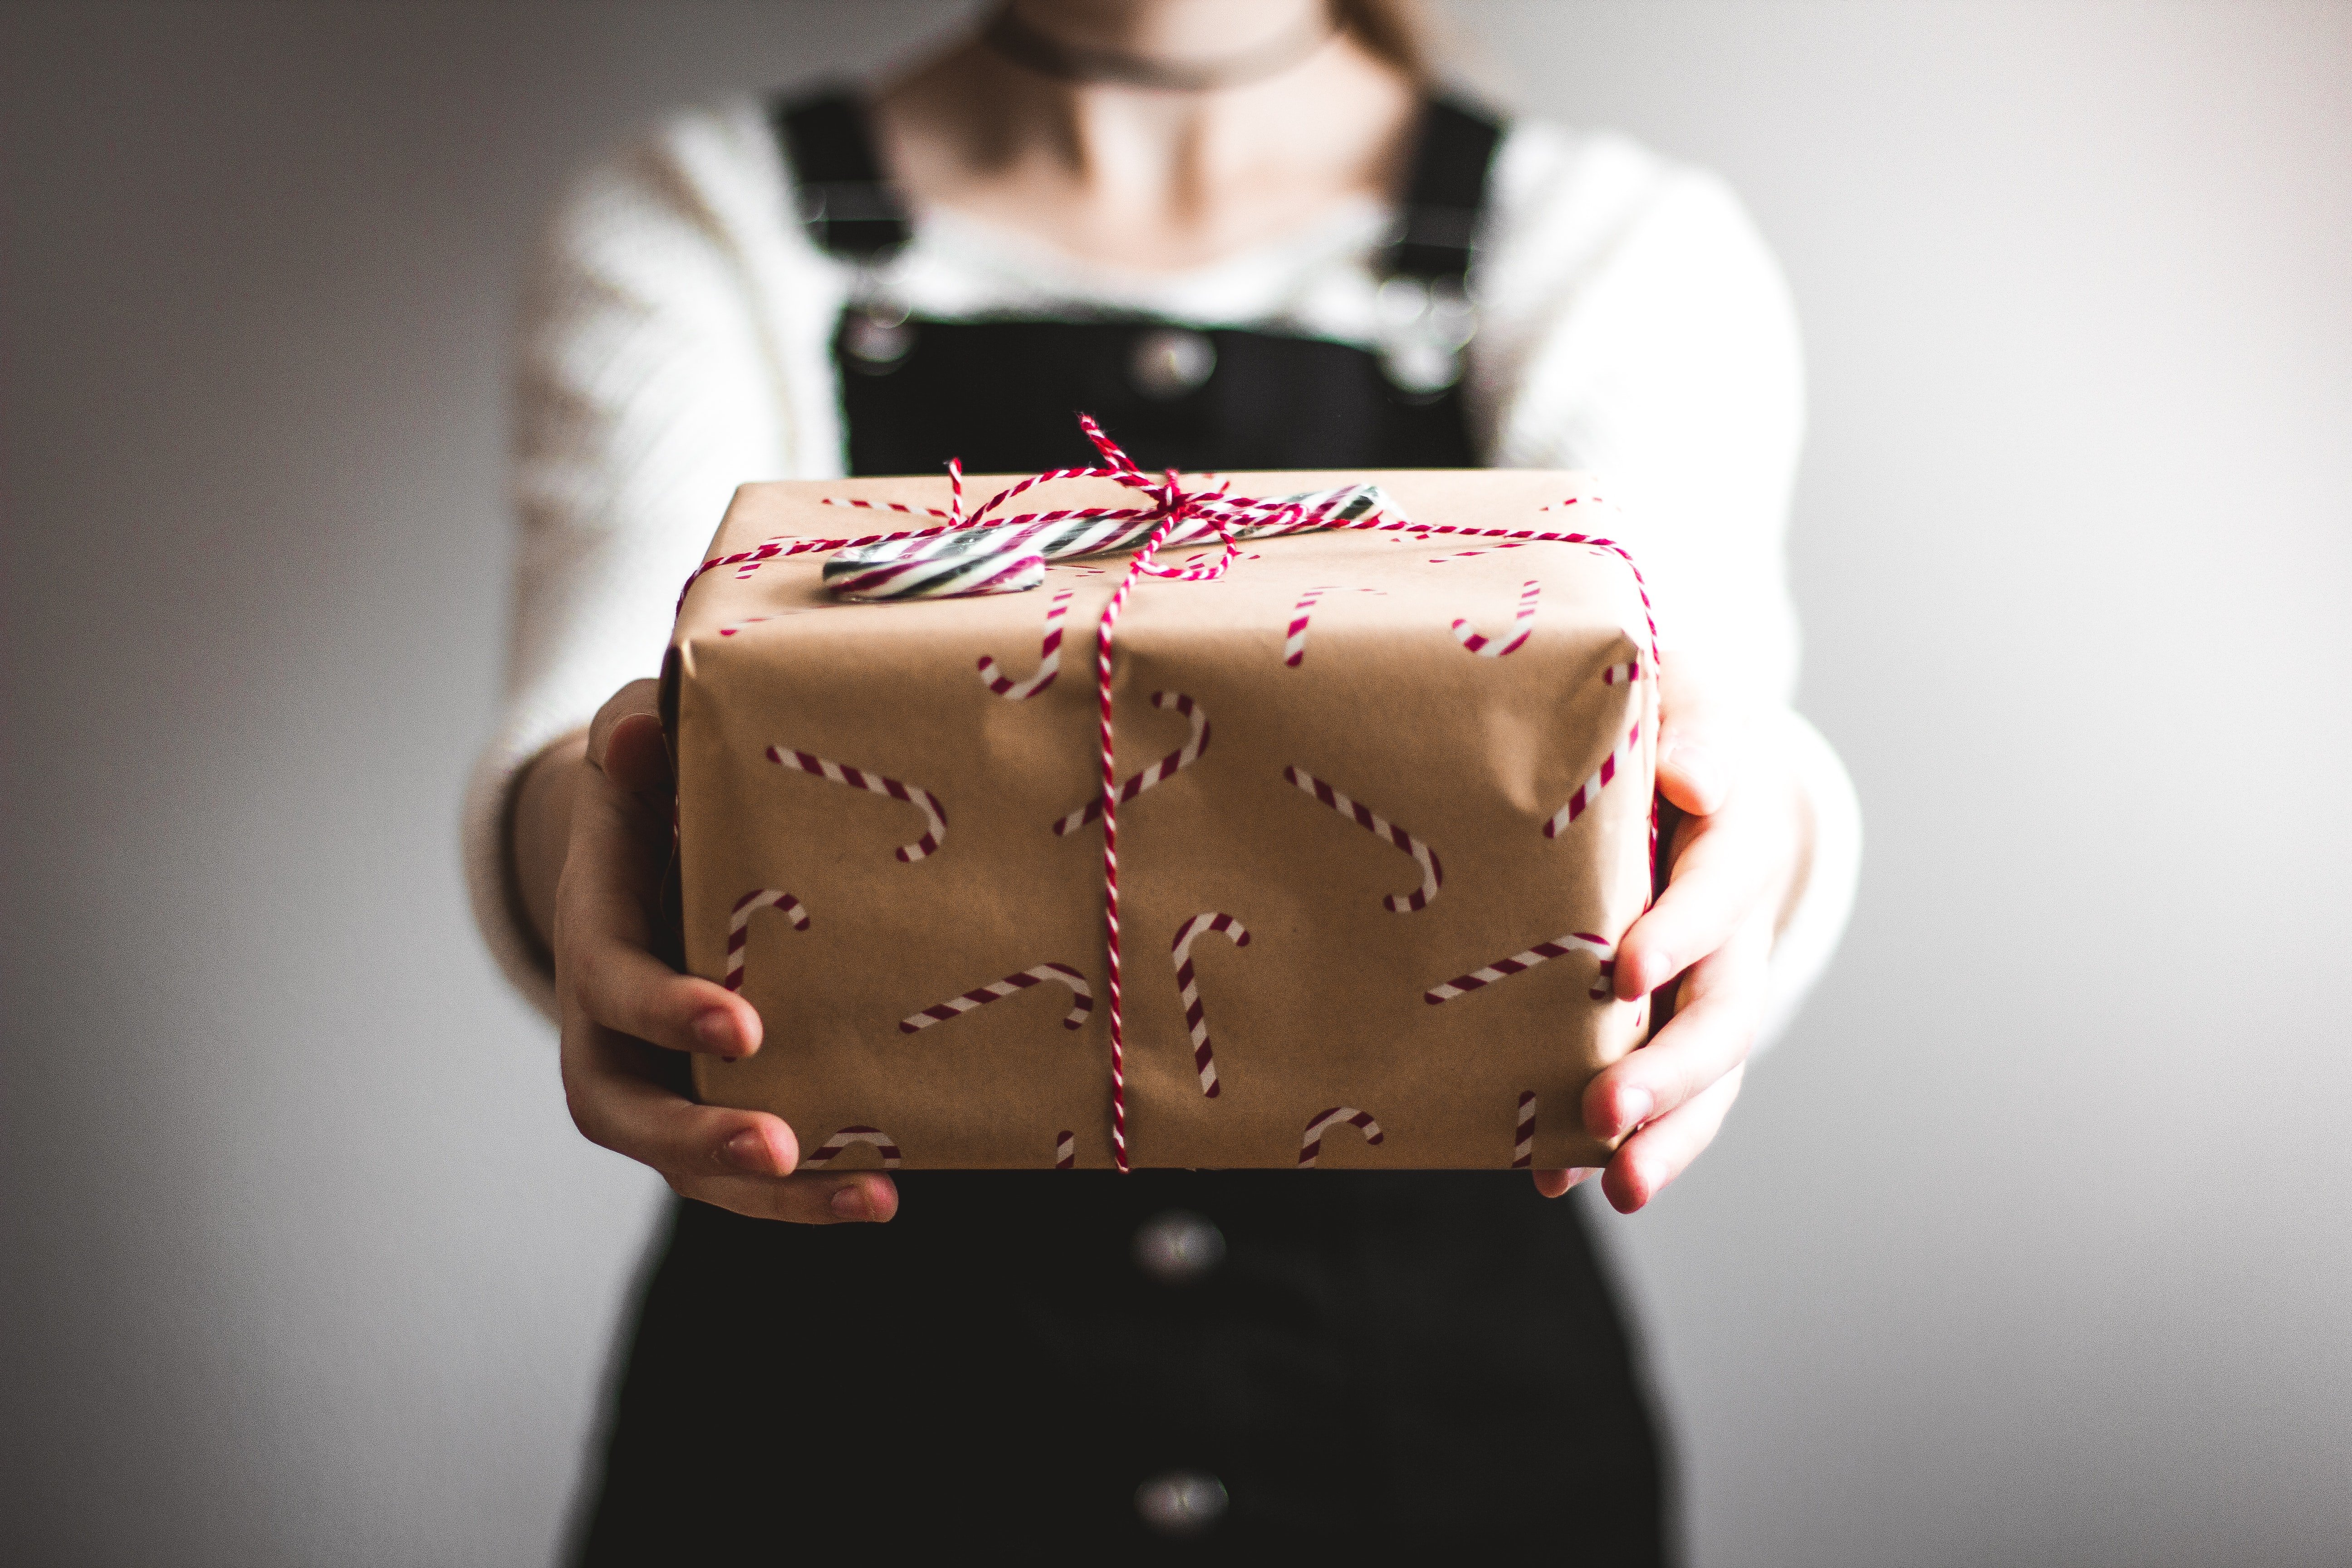 People online advised that gifts aren't tokens of reimbursement to claim in return | Photo: Unsplash  